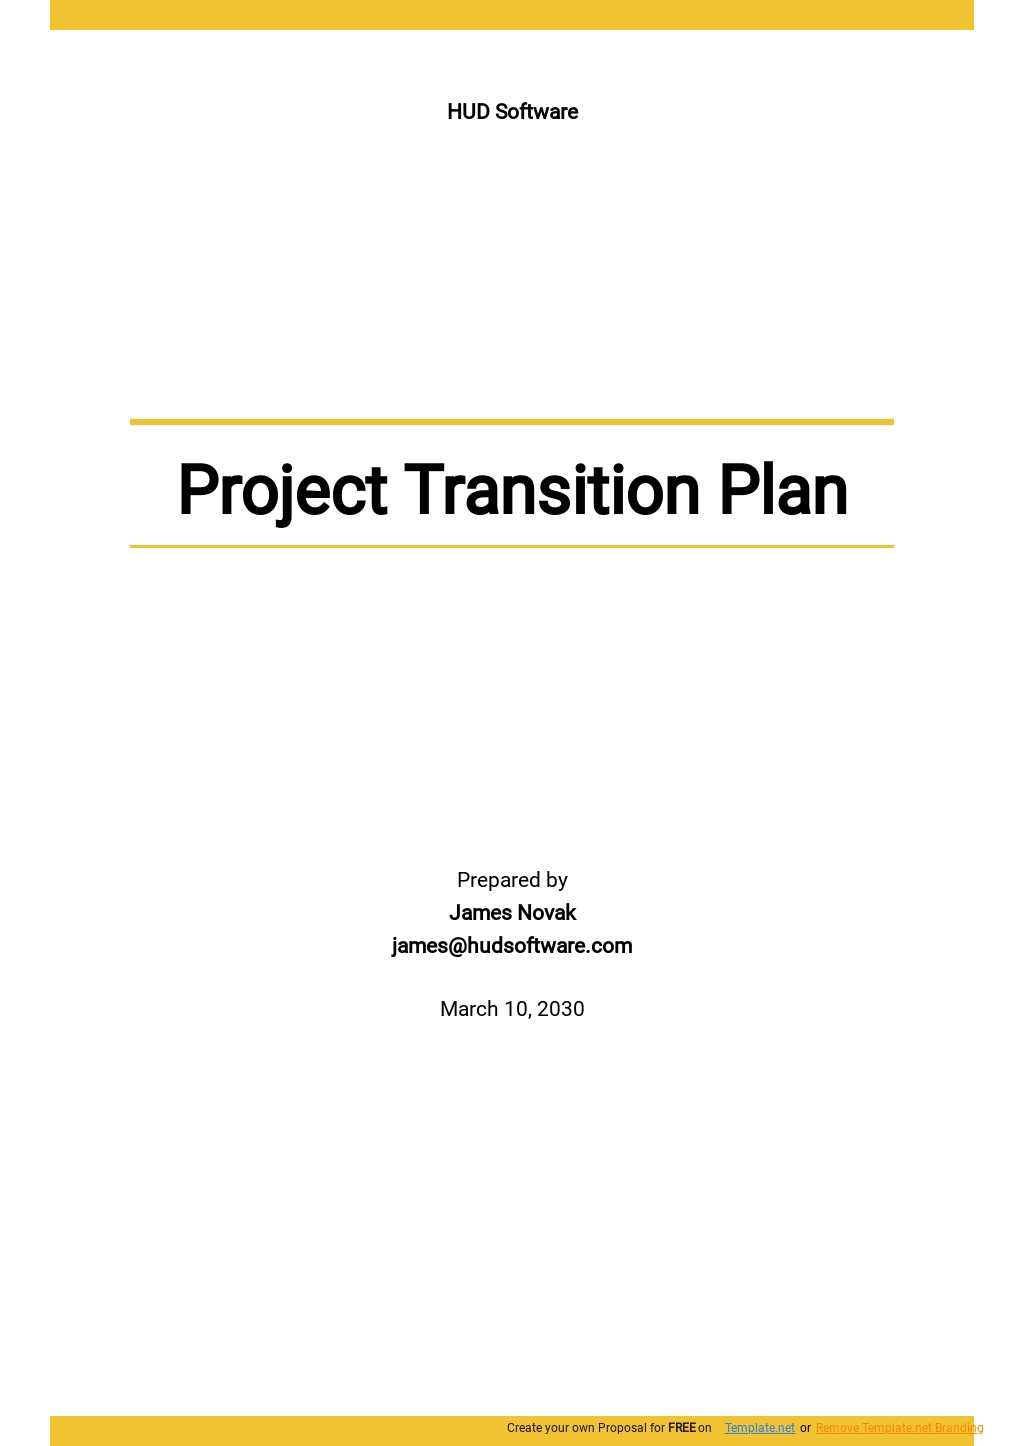 Project Transition Communication Plan Template